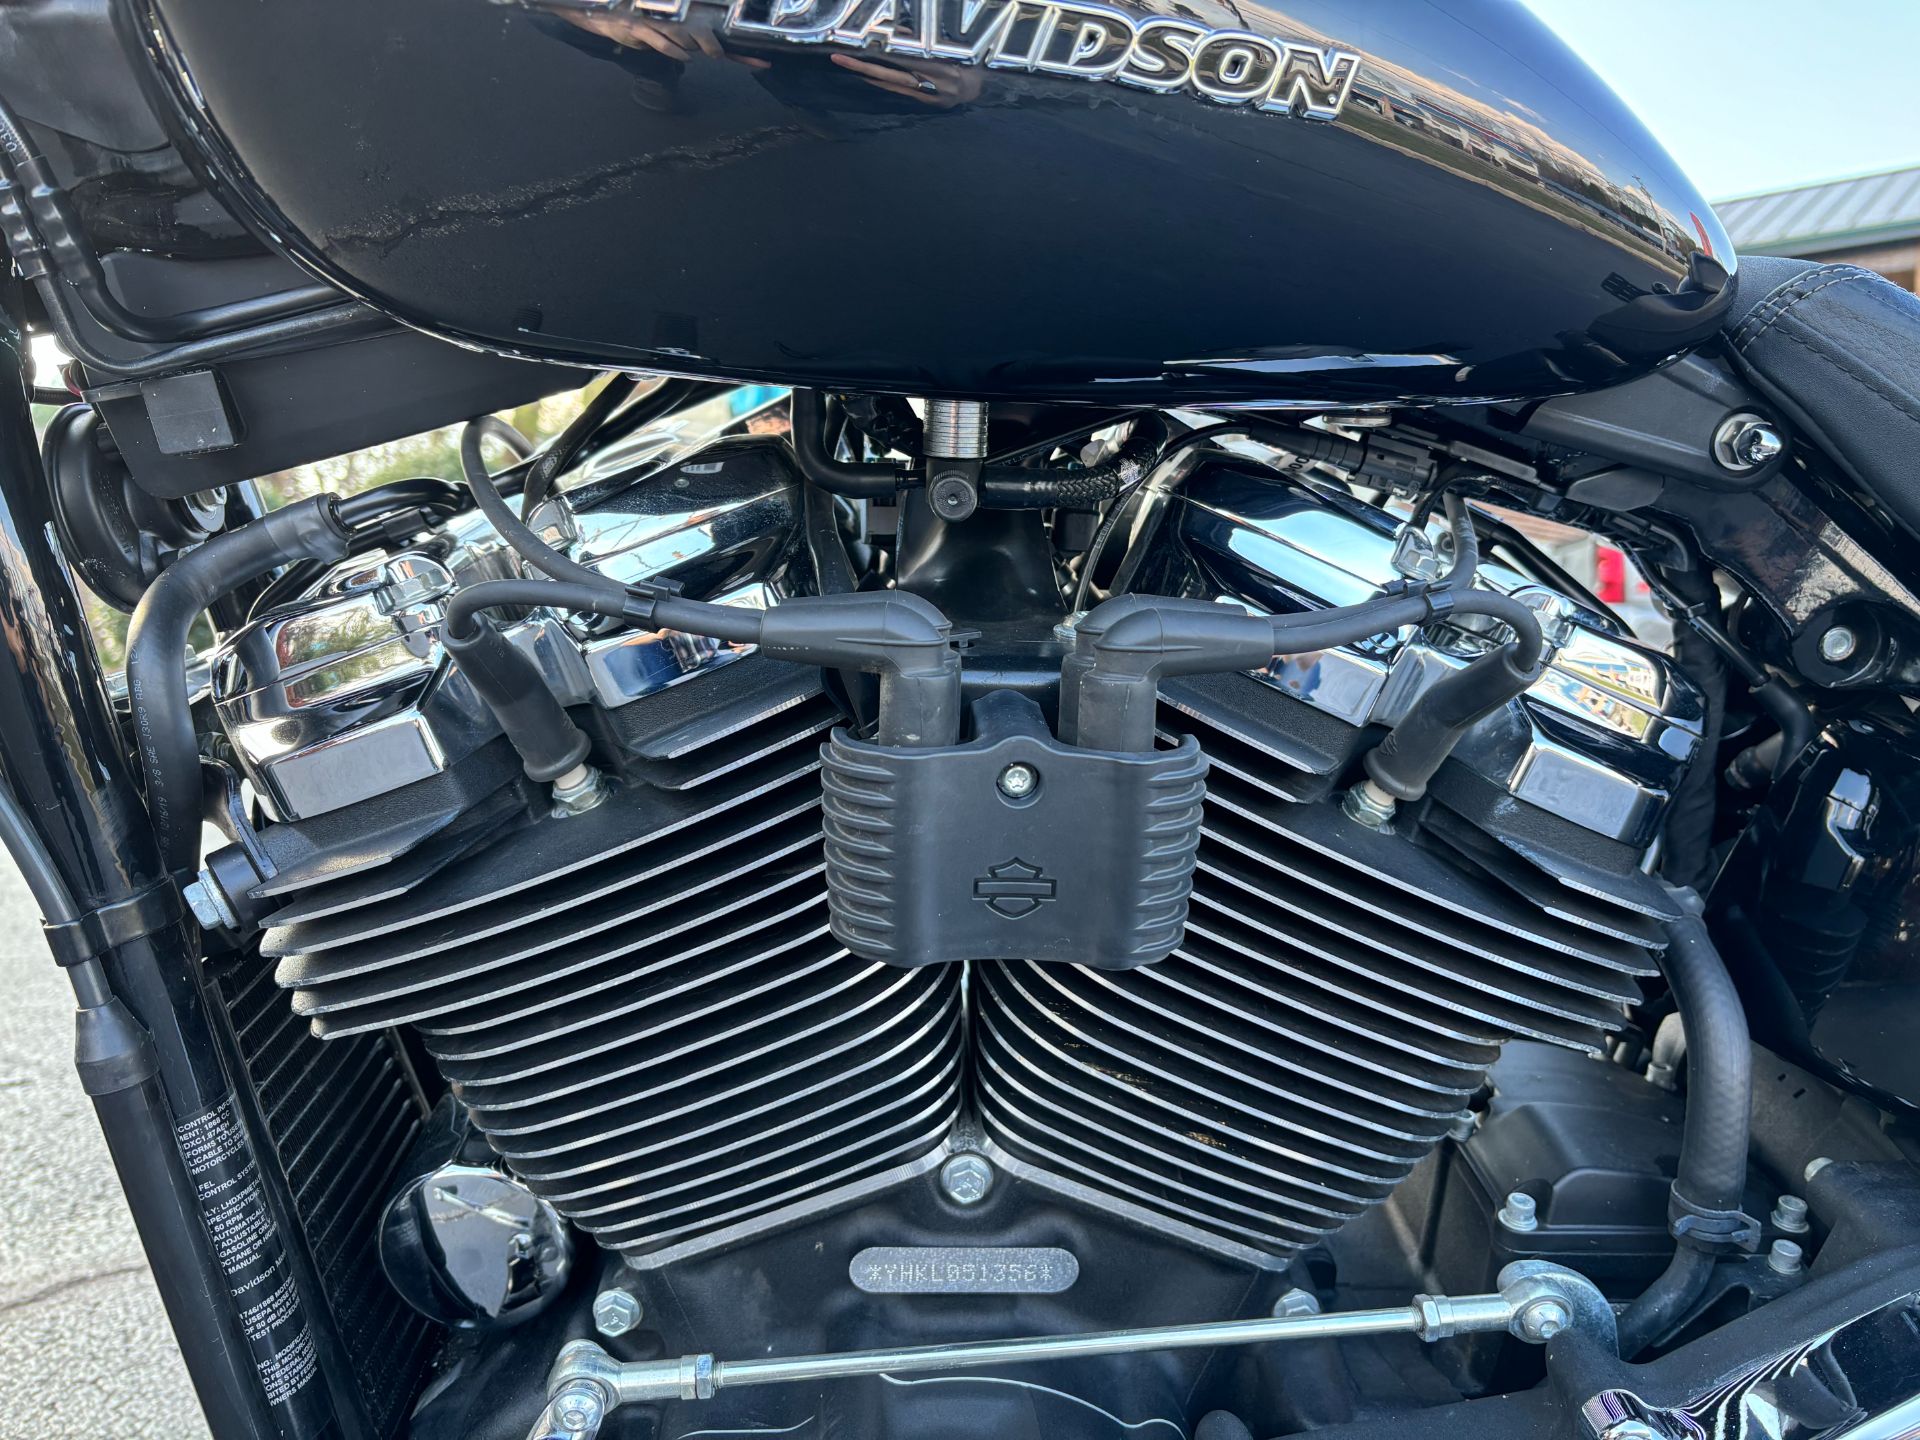 2020 Harley-Davidson Breakout® 114 in Lynchburg, Virginia - Photo 13